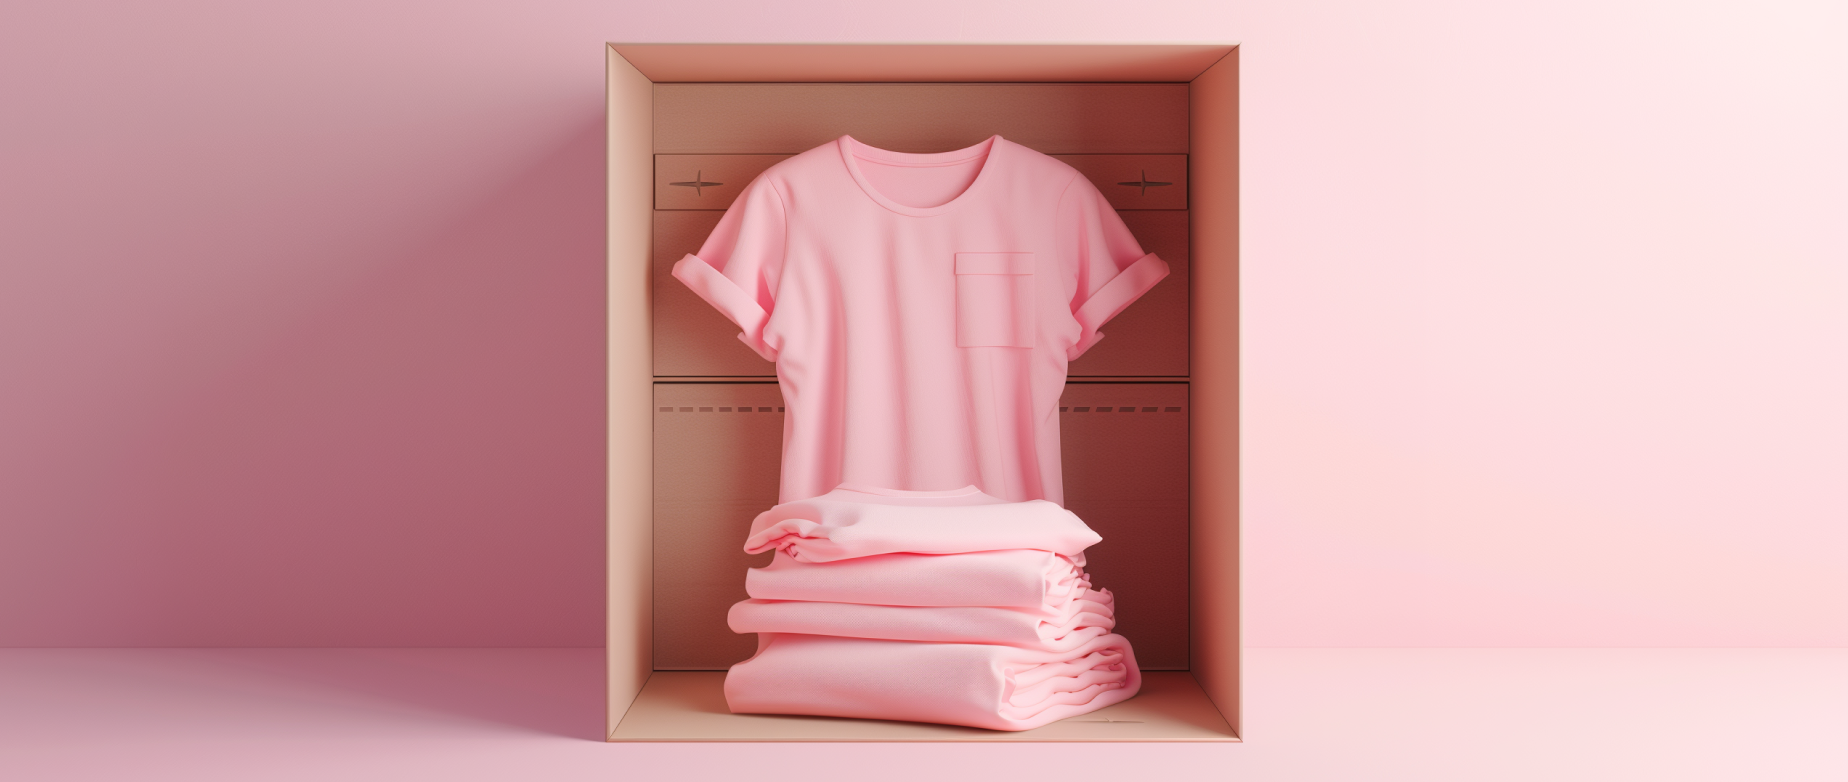 pink shirt inside a shipping box representing apparel fulfillment